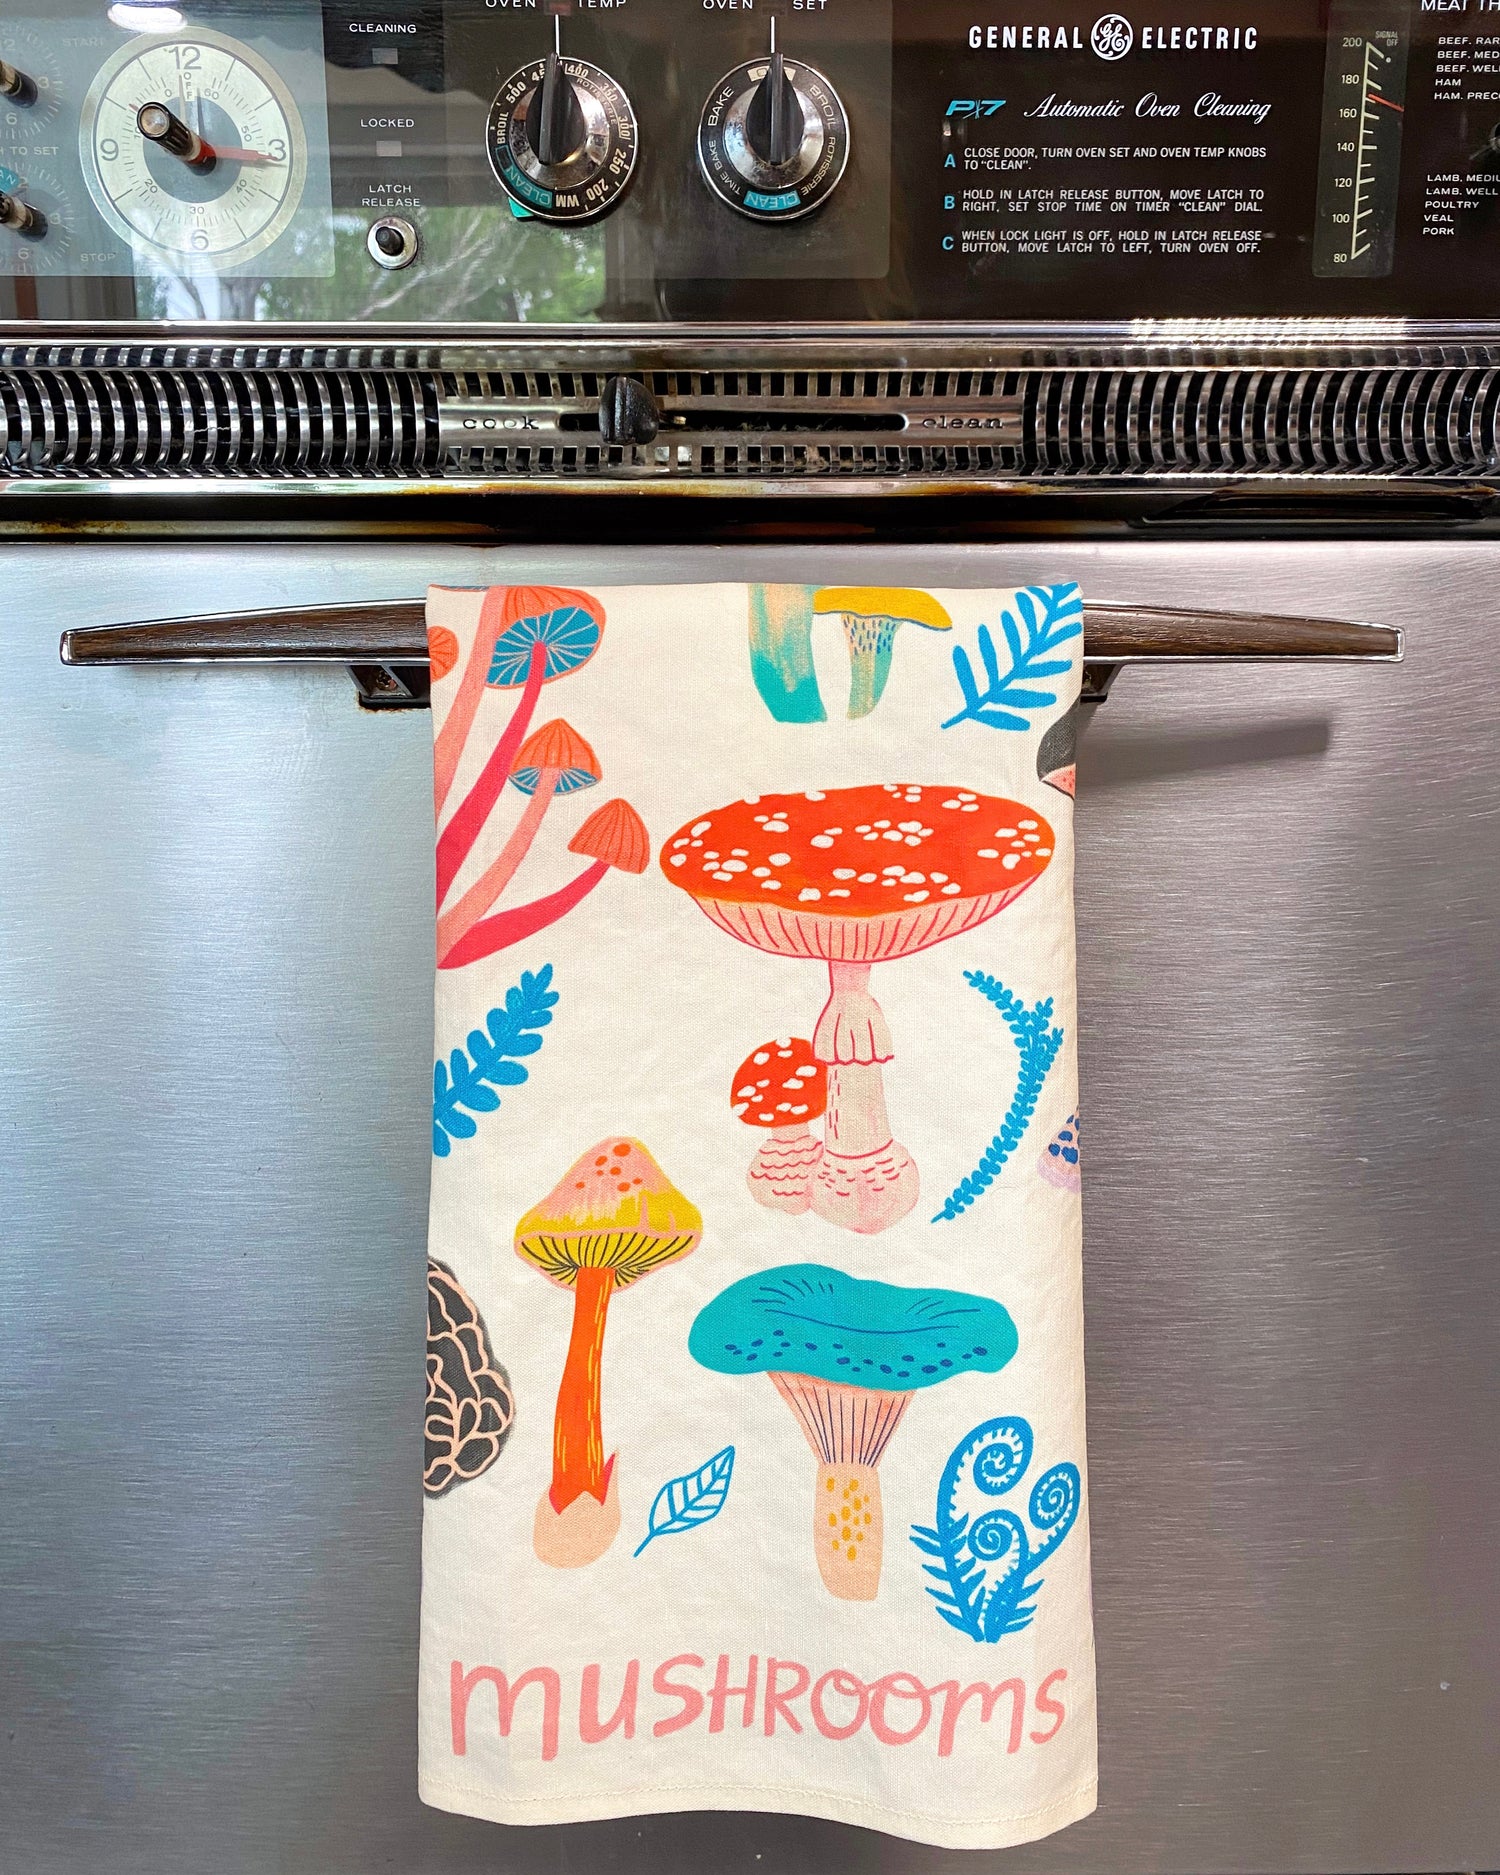 WILD MUSHROOMS FERN European Linen Dish Towels - Exclusive Designs  Decorative Tea Towels - Elegant 100% Linen Kitchen Towels - Vegetables  Mushroom